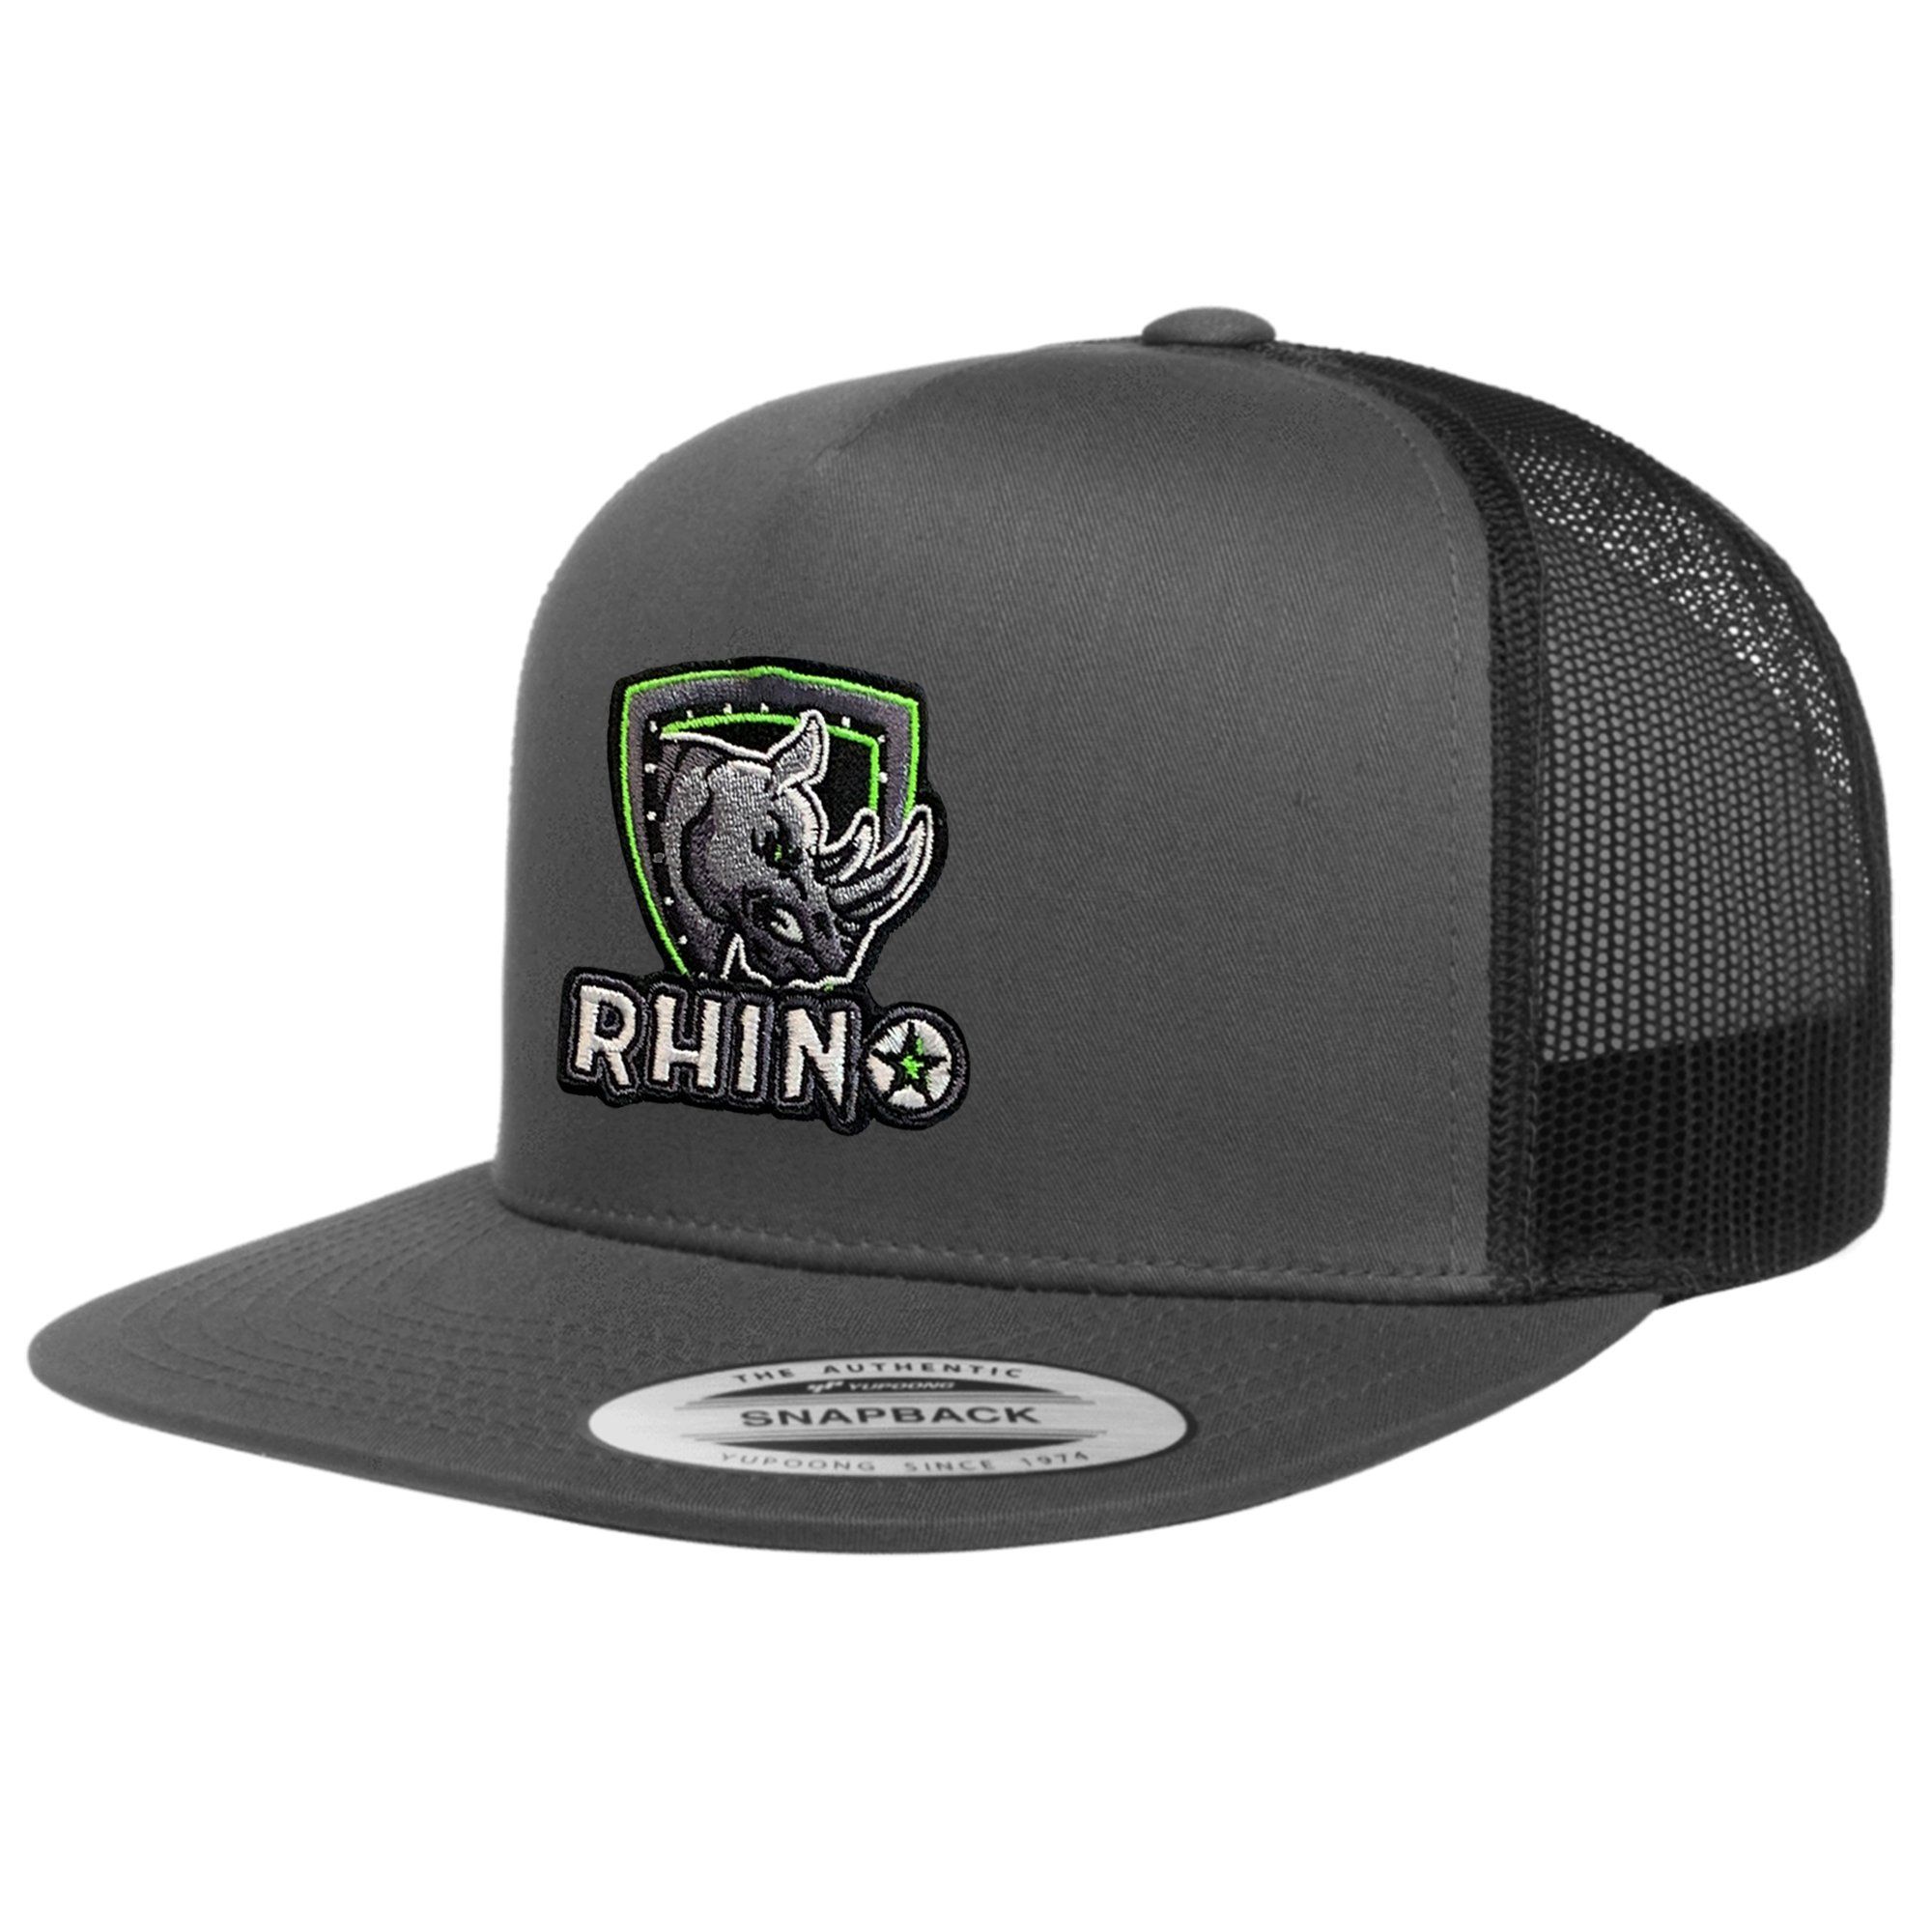 Mesh Snapback - Flat Bill Caps Rhino USA, Inc. Gray/Black 